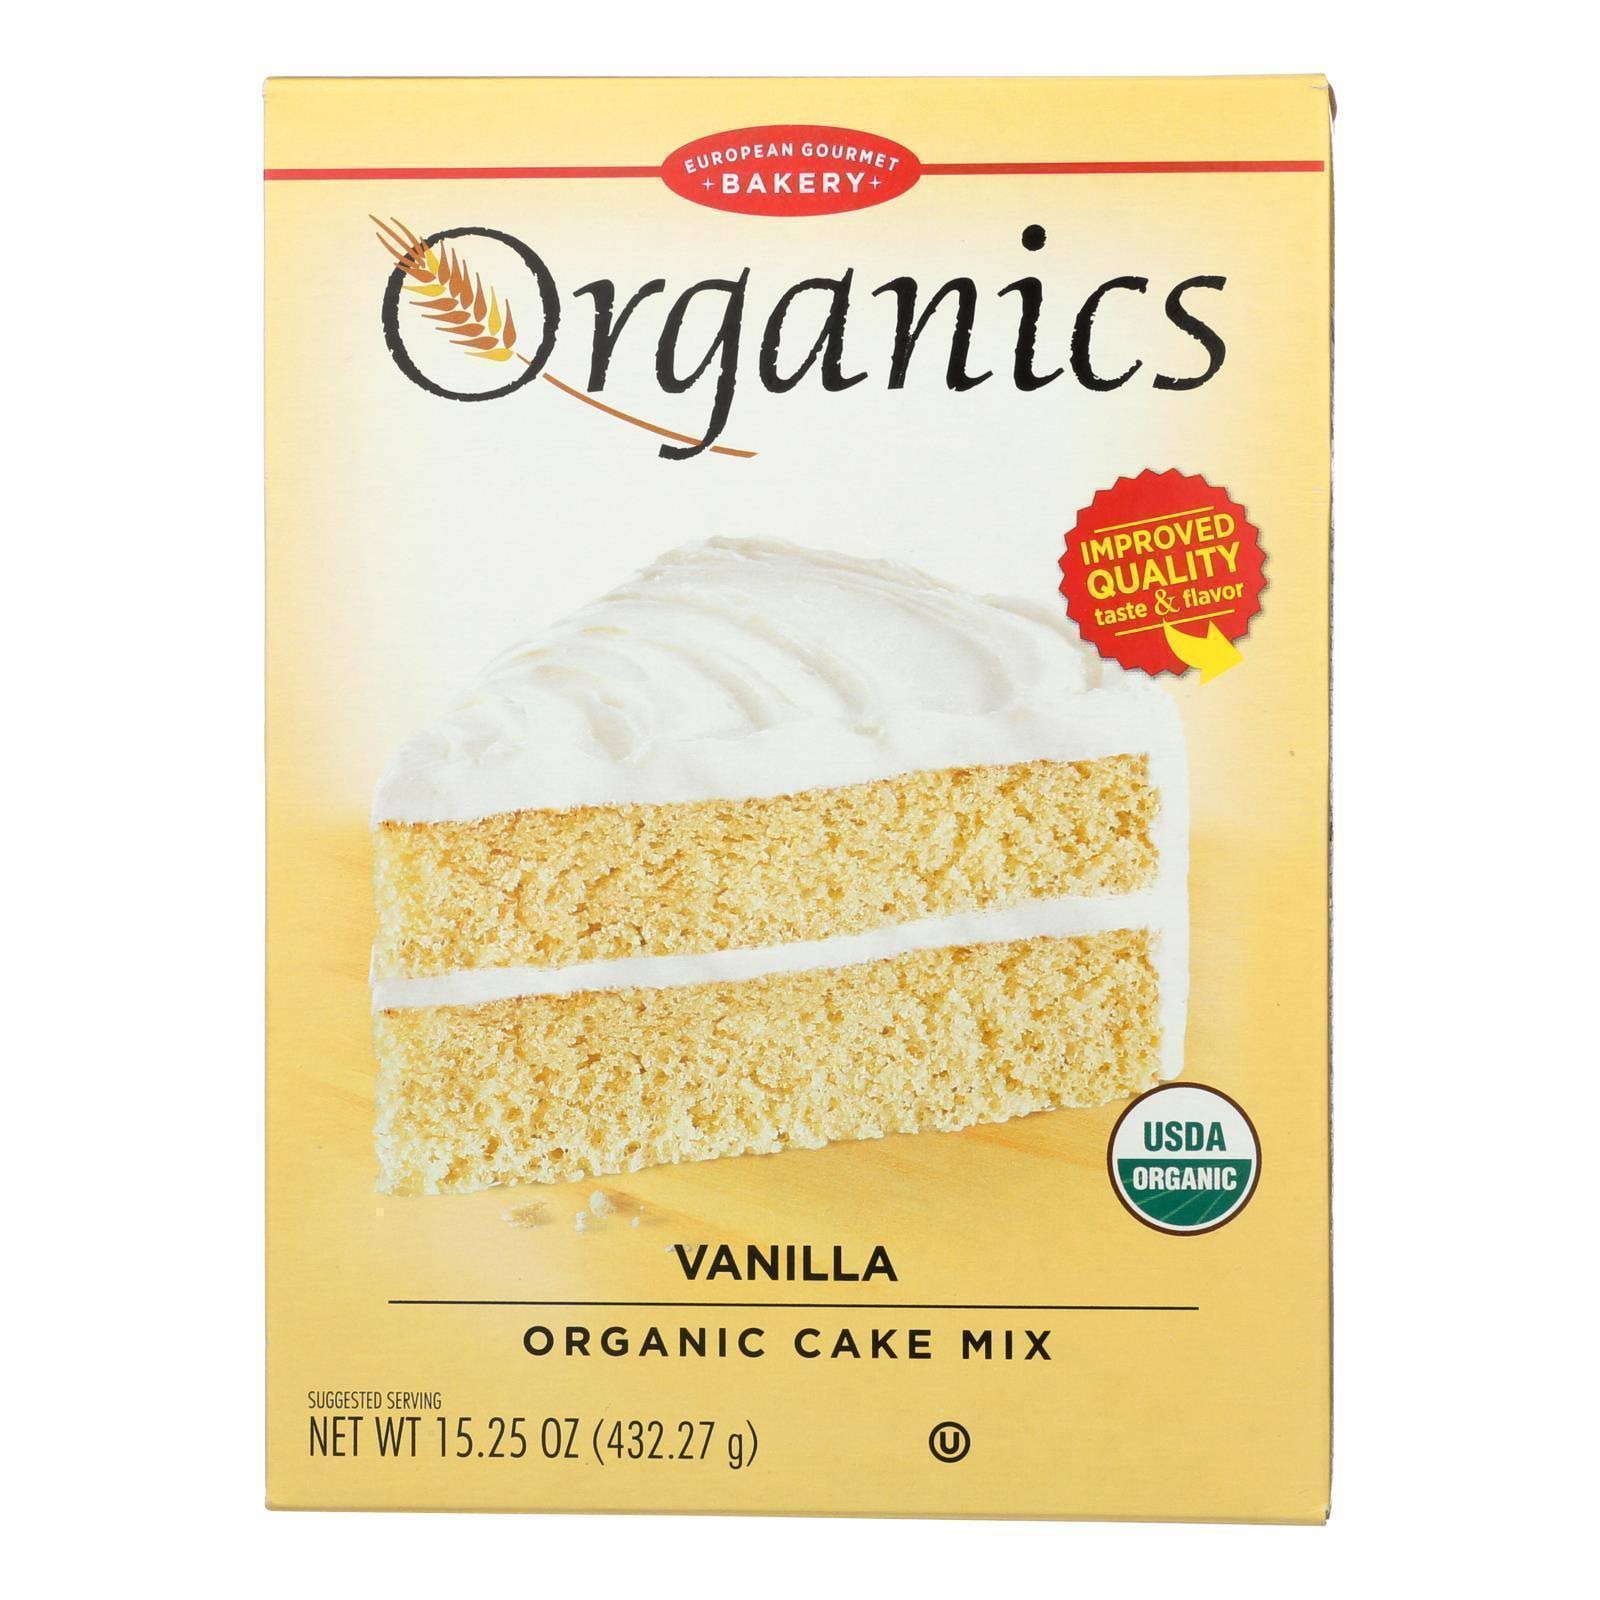 European Gourmet Bakery Organic Cake Mix - Vanilla, 15.25oz